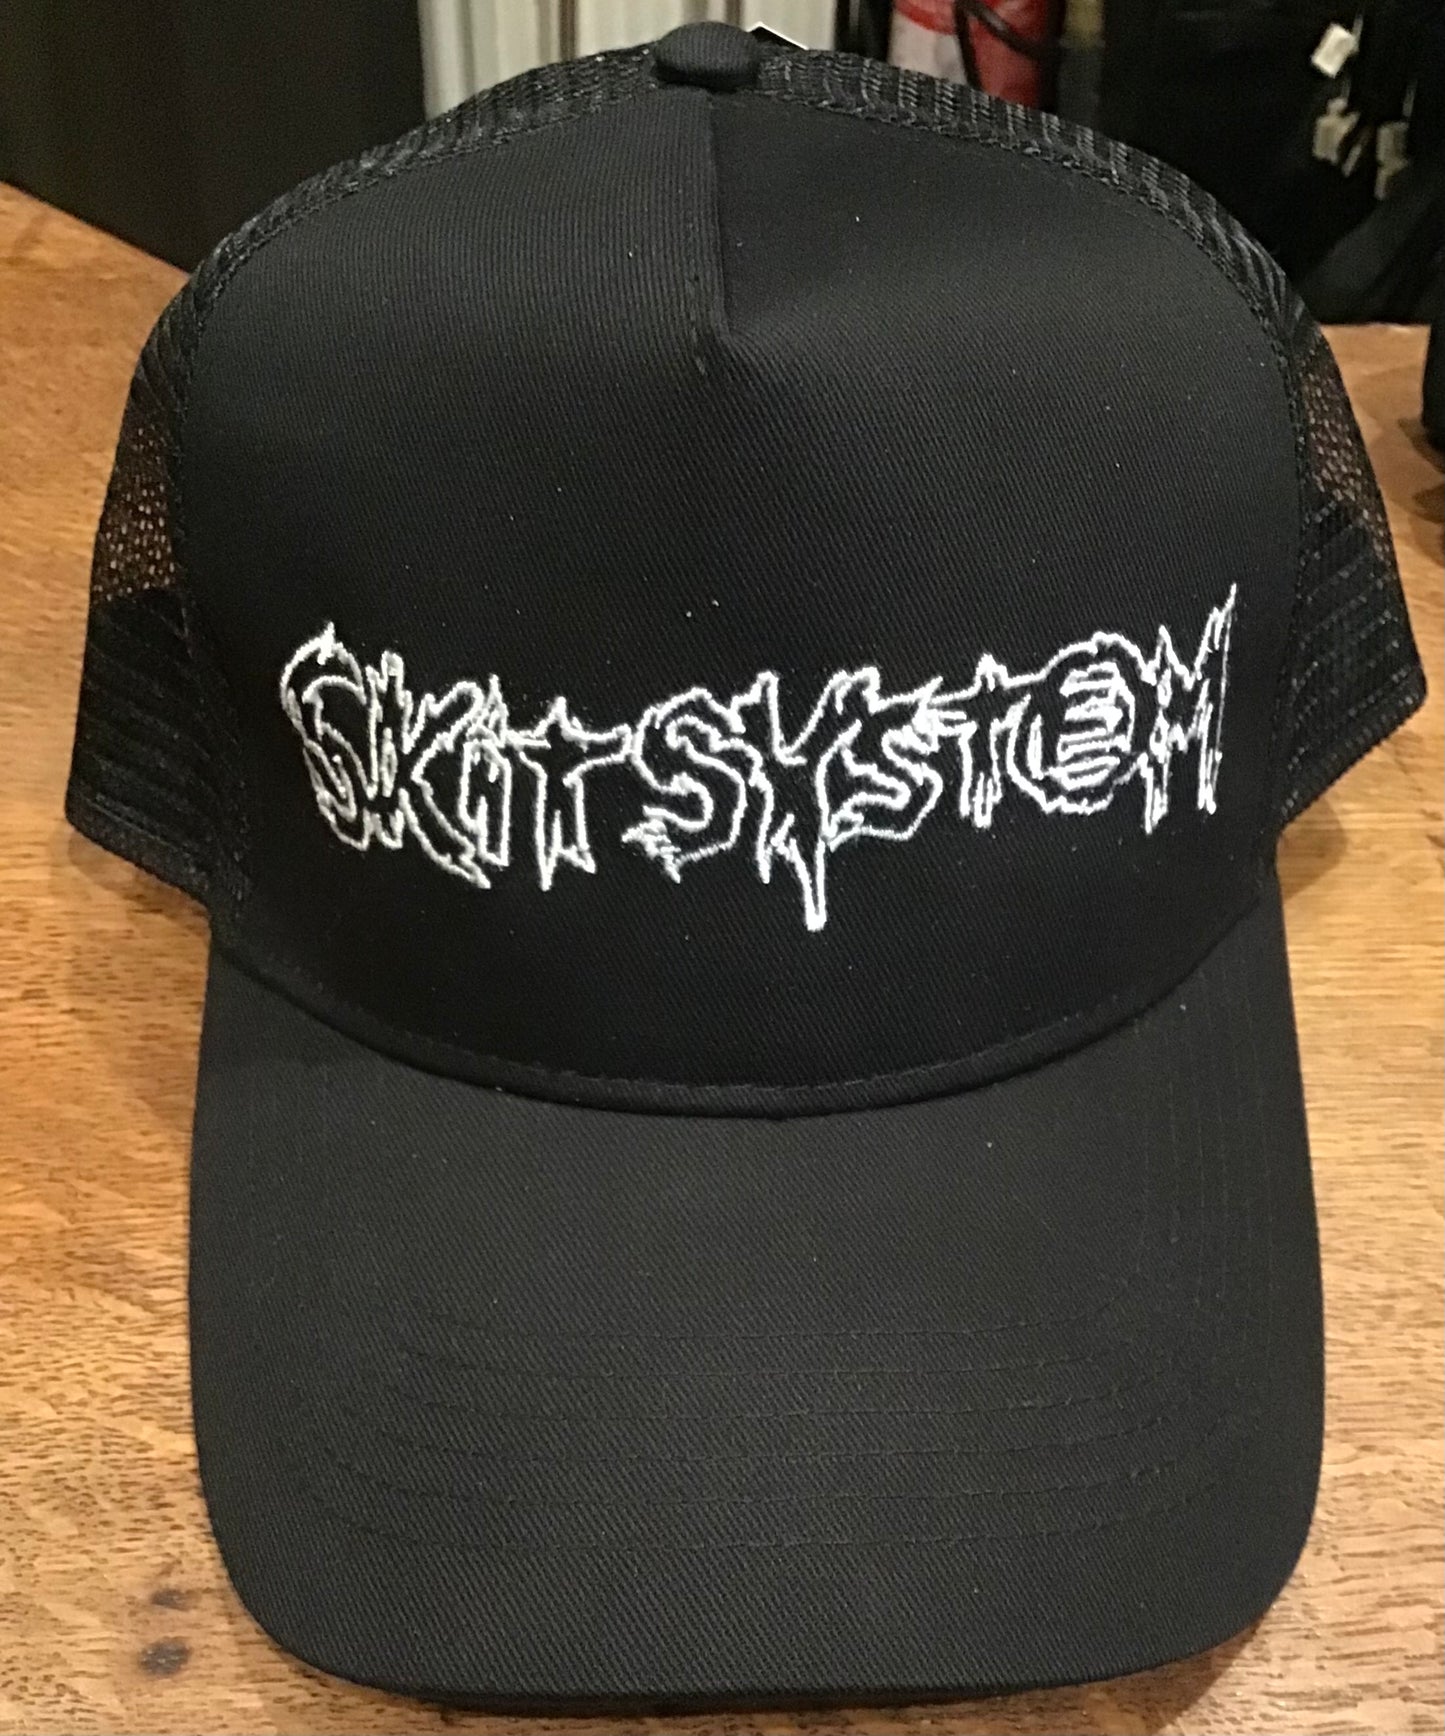 Skitsystem Trucker Cap by Insane//Phobia embroidery